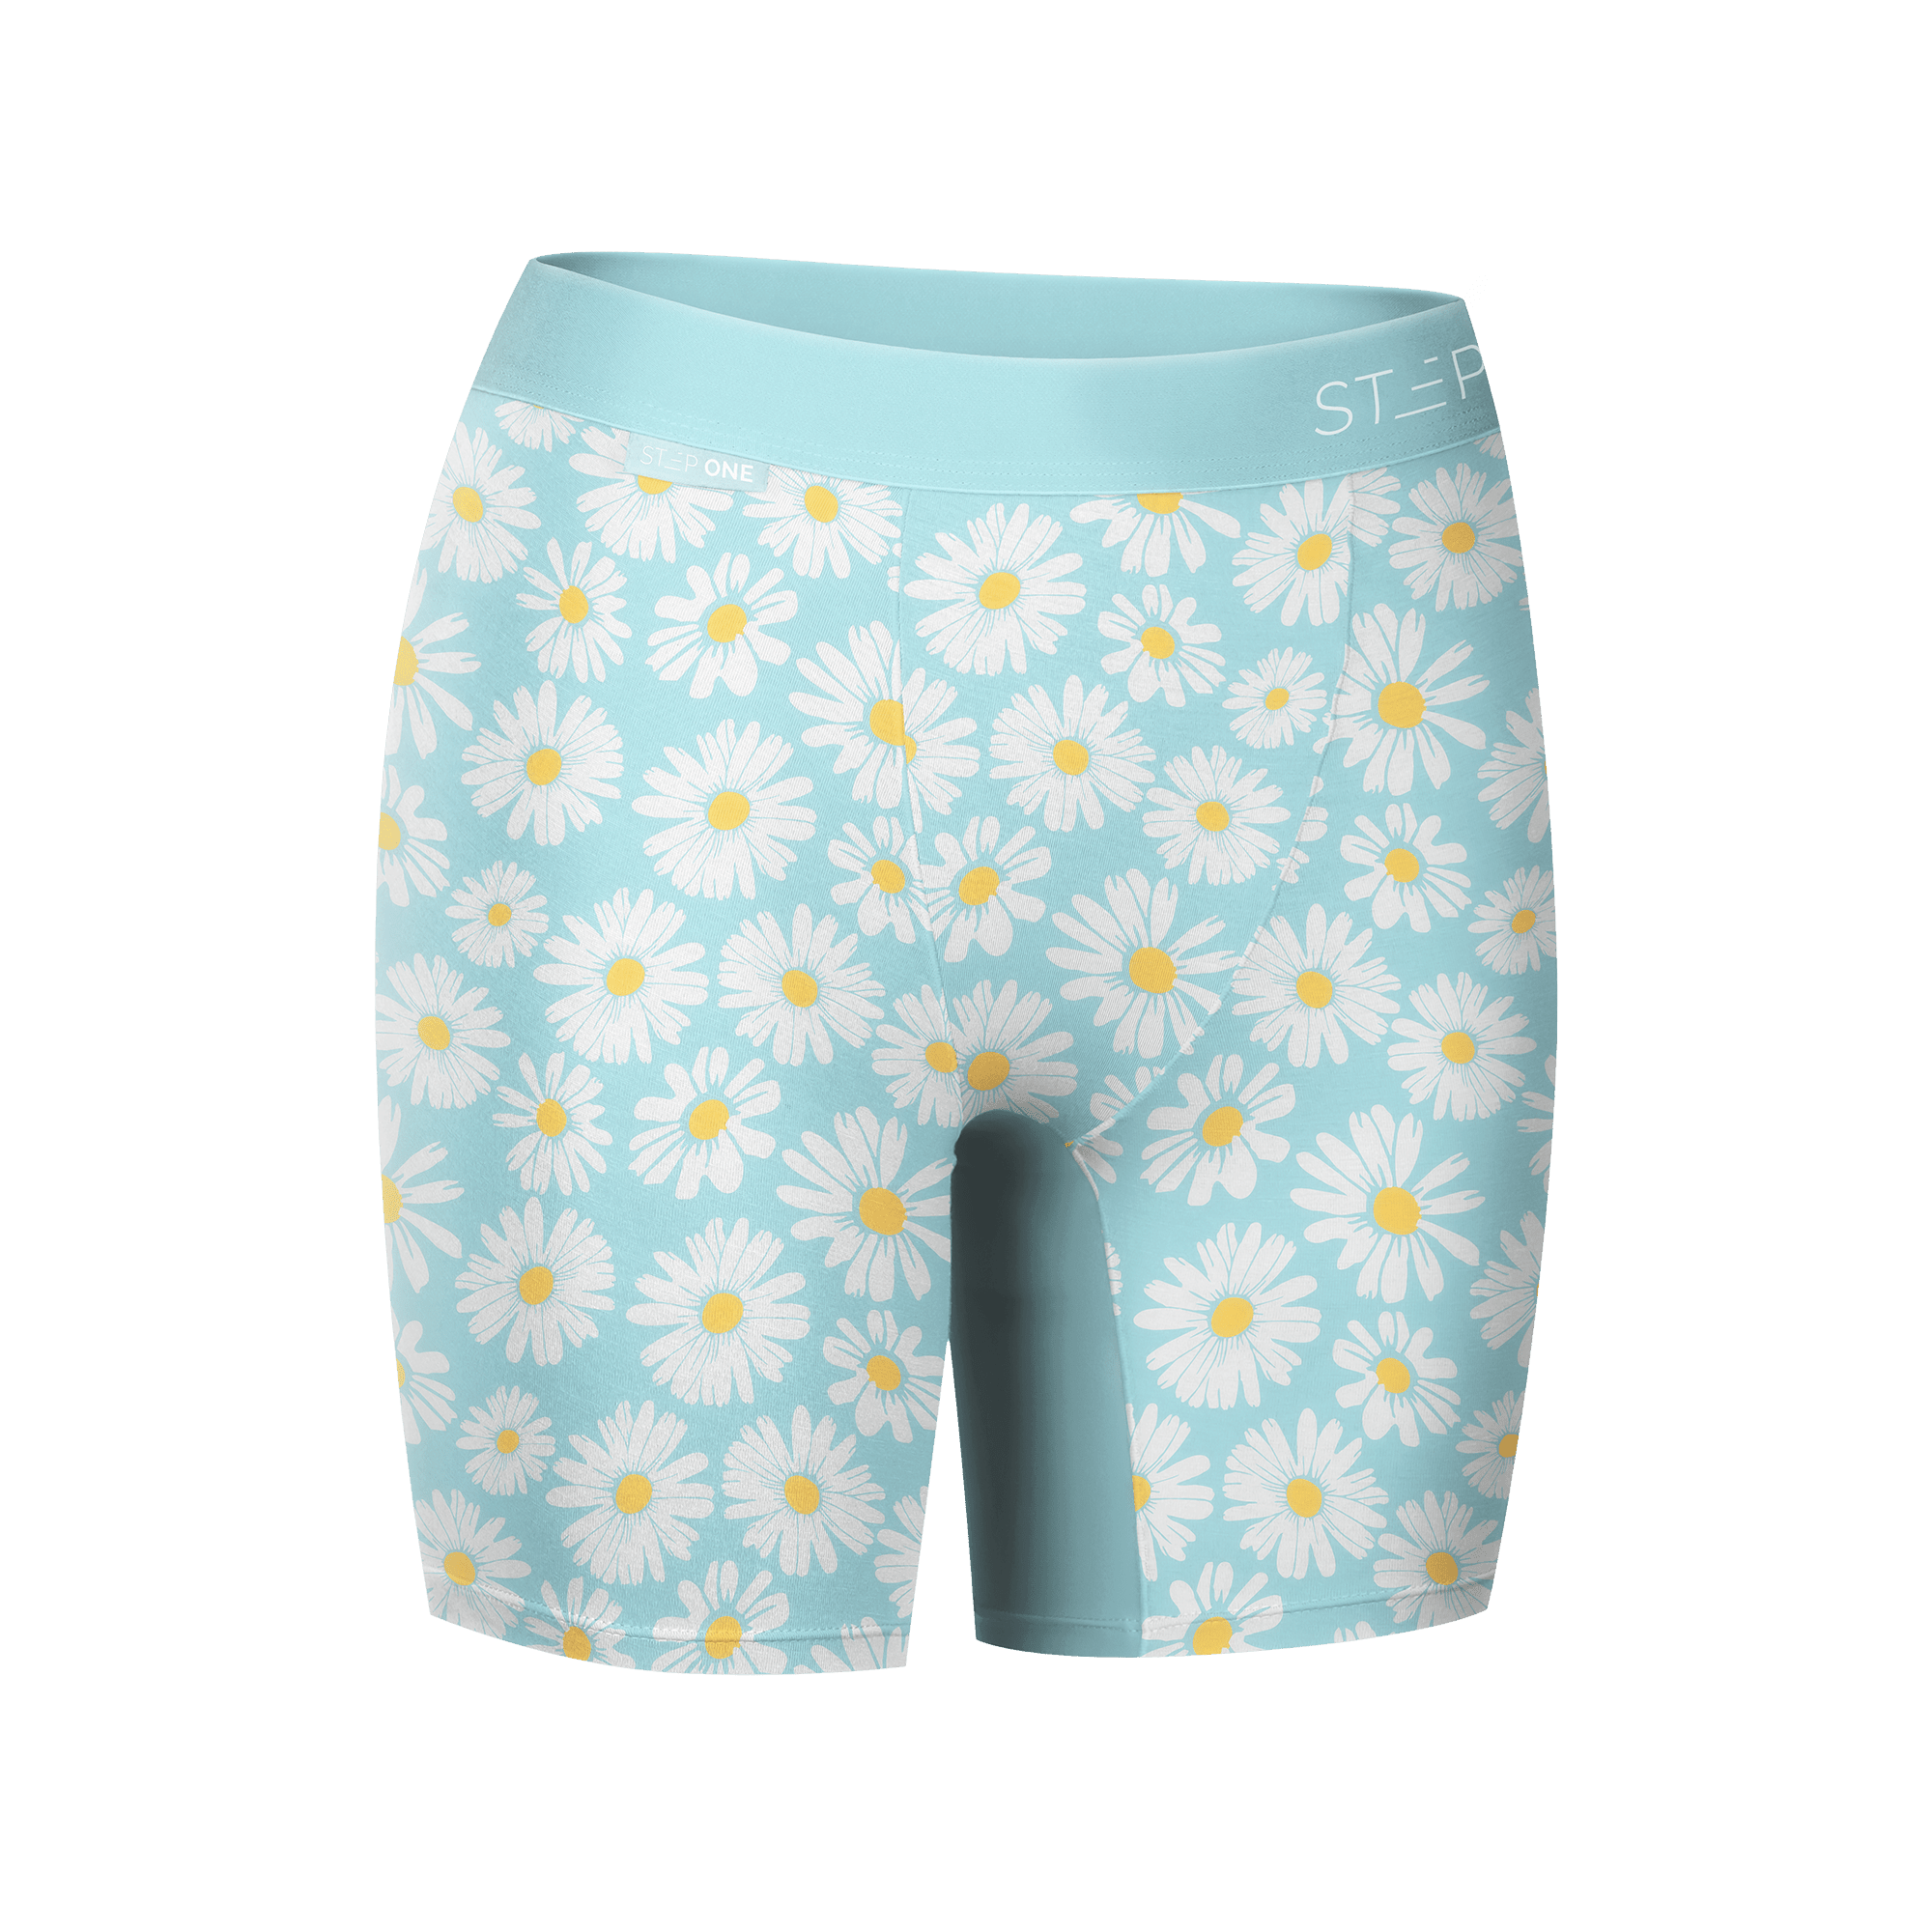 Buy Blue Women's Bamboo Underwear UK